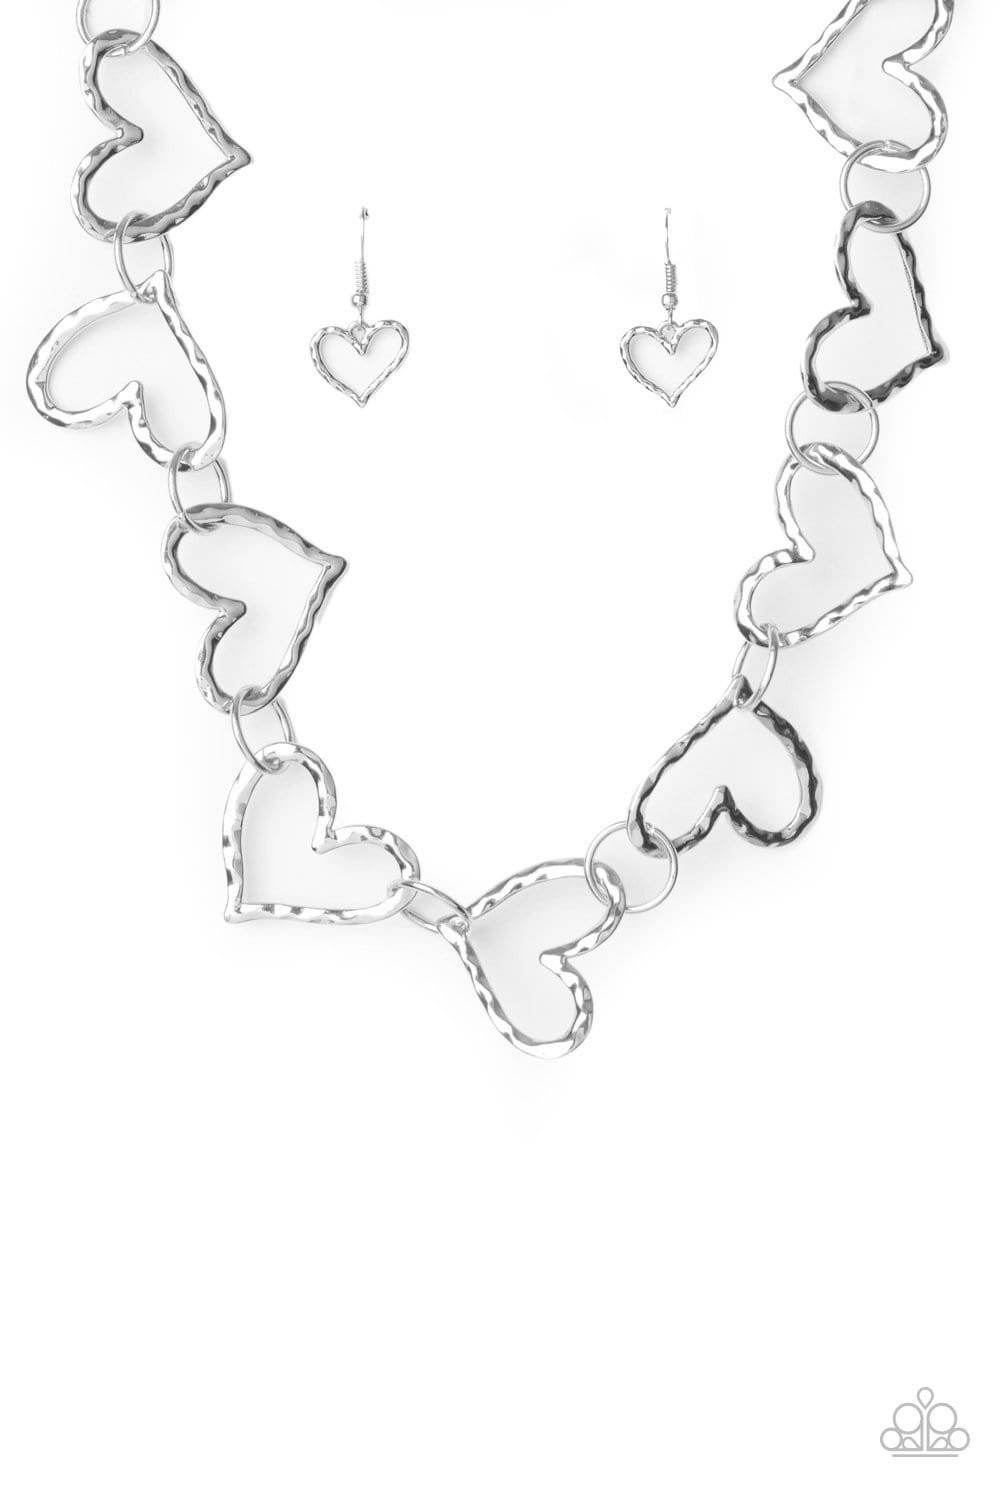 Paparazzi Vintagely Valentine Heart Necklaces